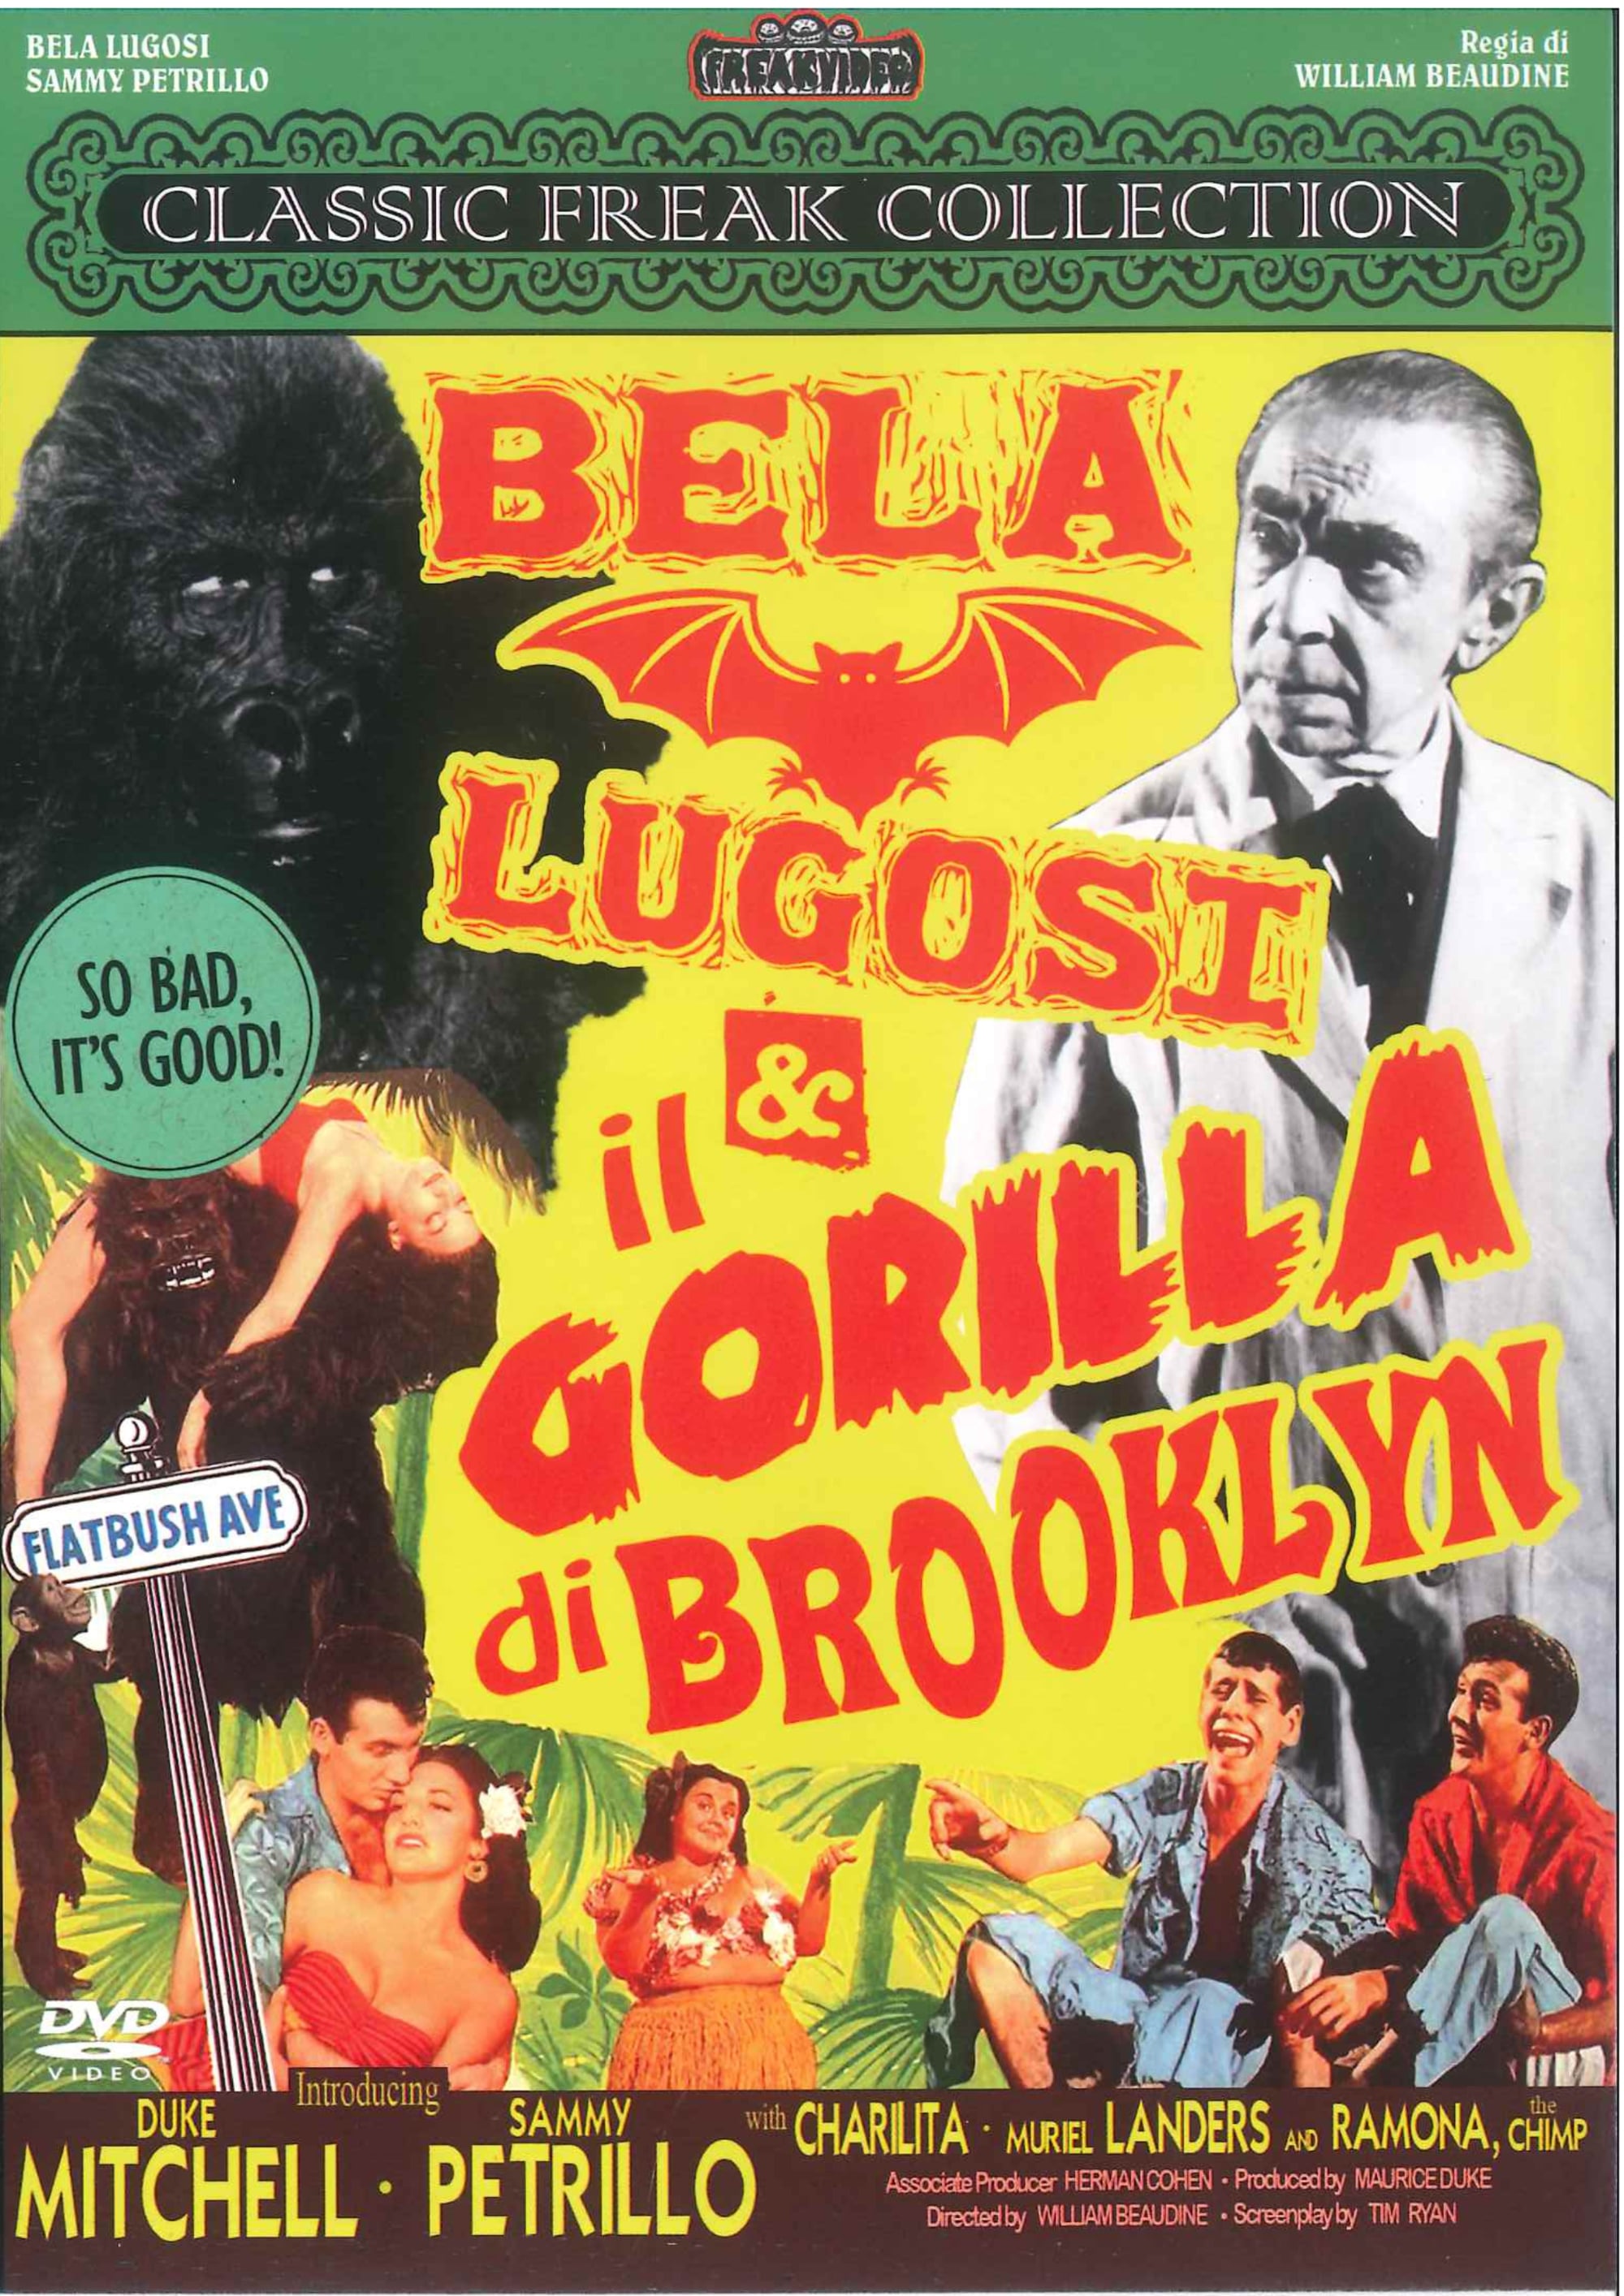 Bela Lugosi & il Gorilla di Brooklyn film